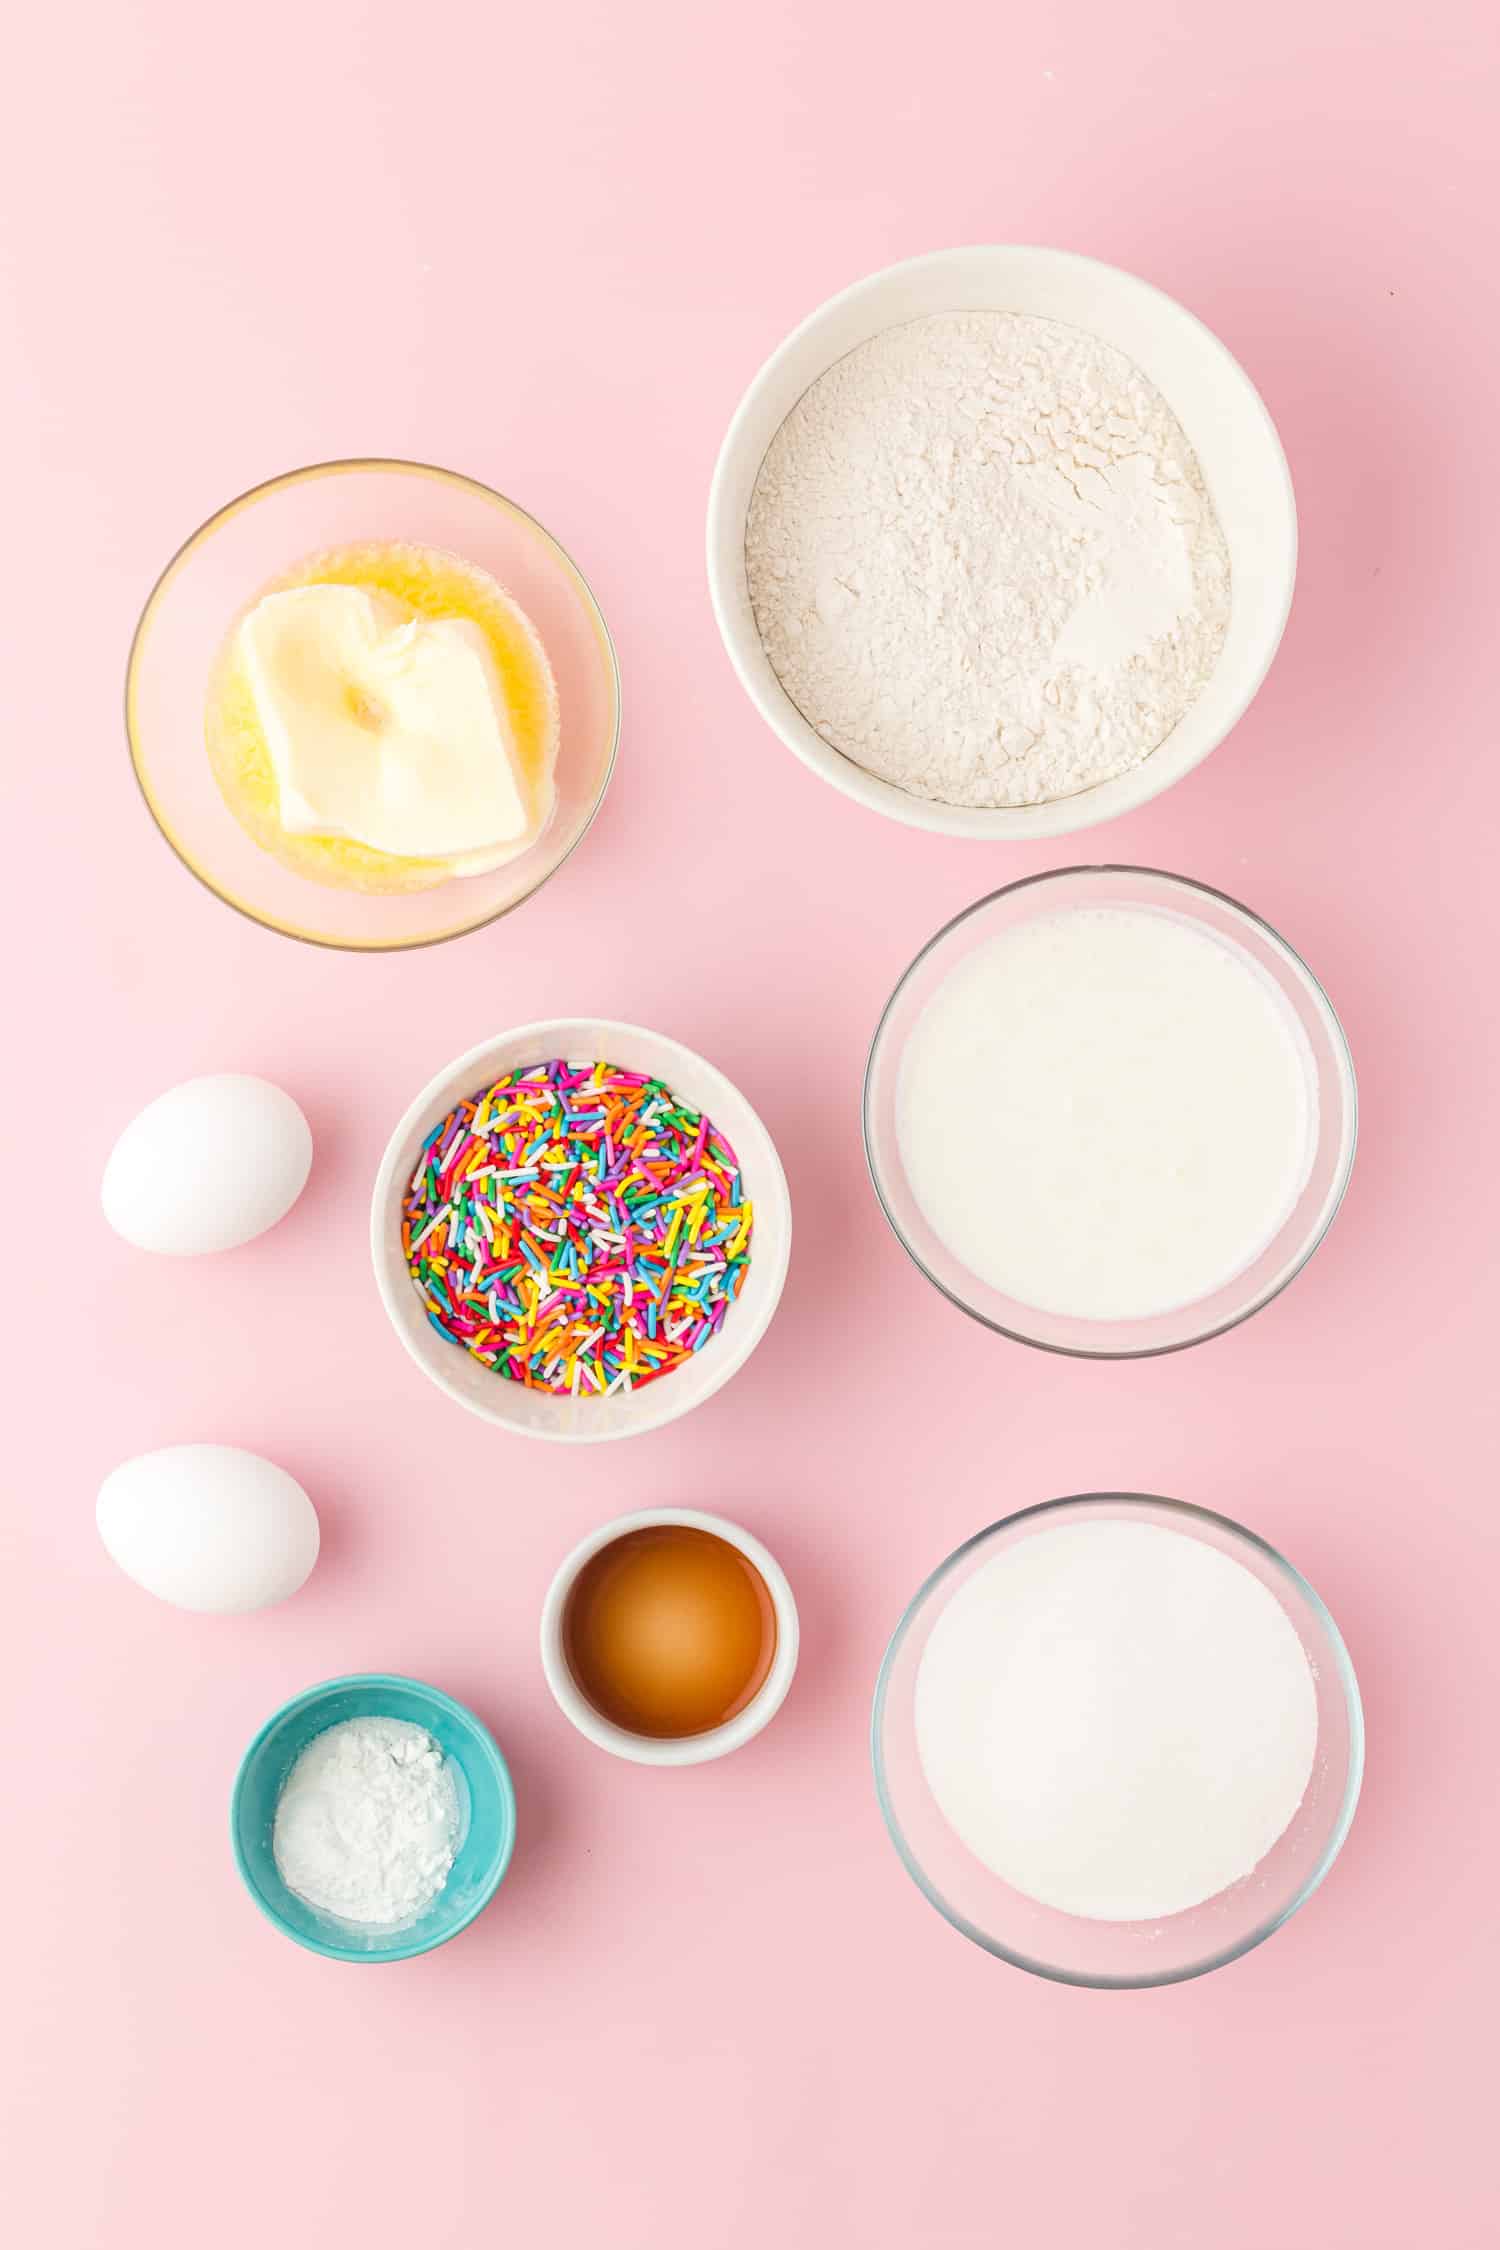 Bowls of individual Funfetti cupcake ingredients on pink background